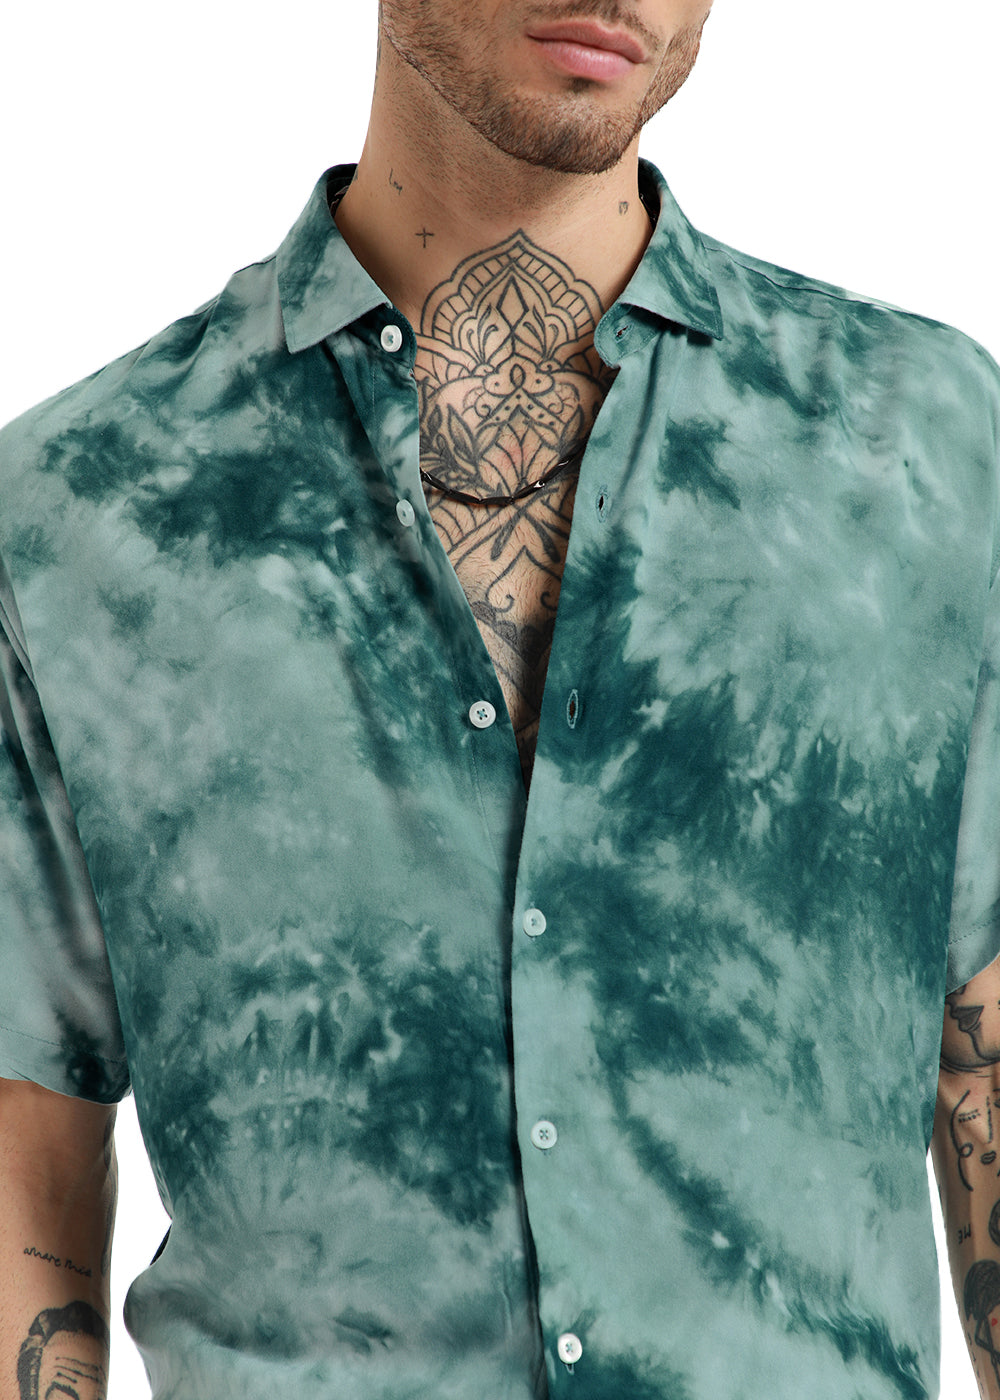 Monotone Teal Tie Dye Half Sleeve Shirt 2